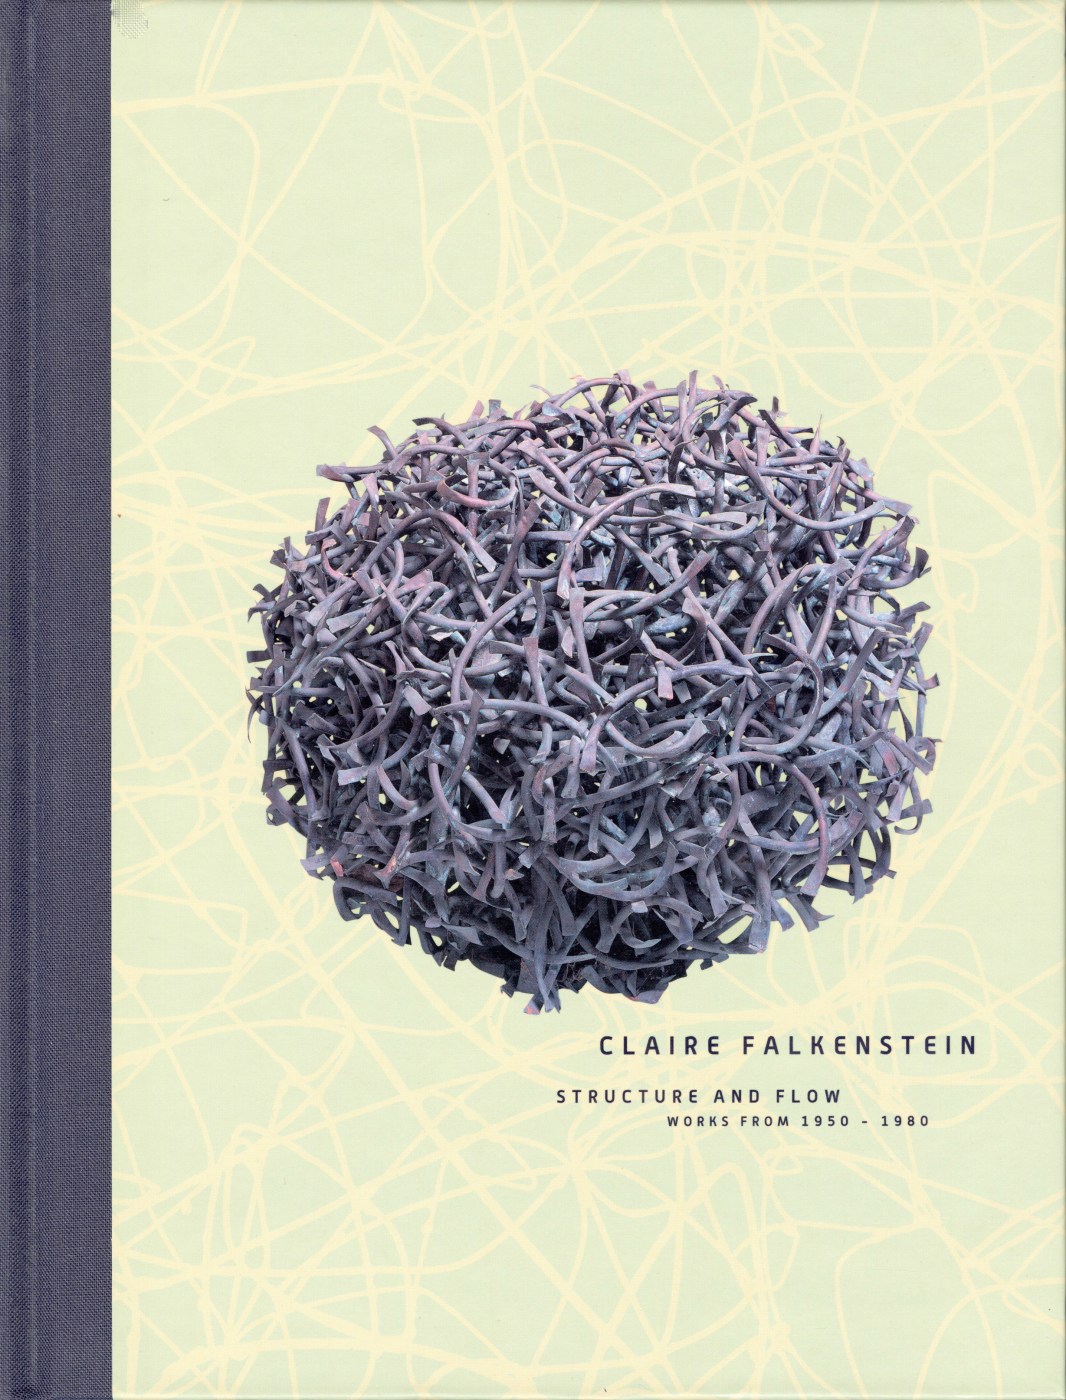 Claire Falkenstein: Structure and Flow - Publications - Louis Stern Fine Arts